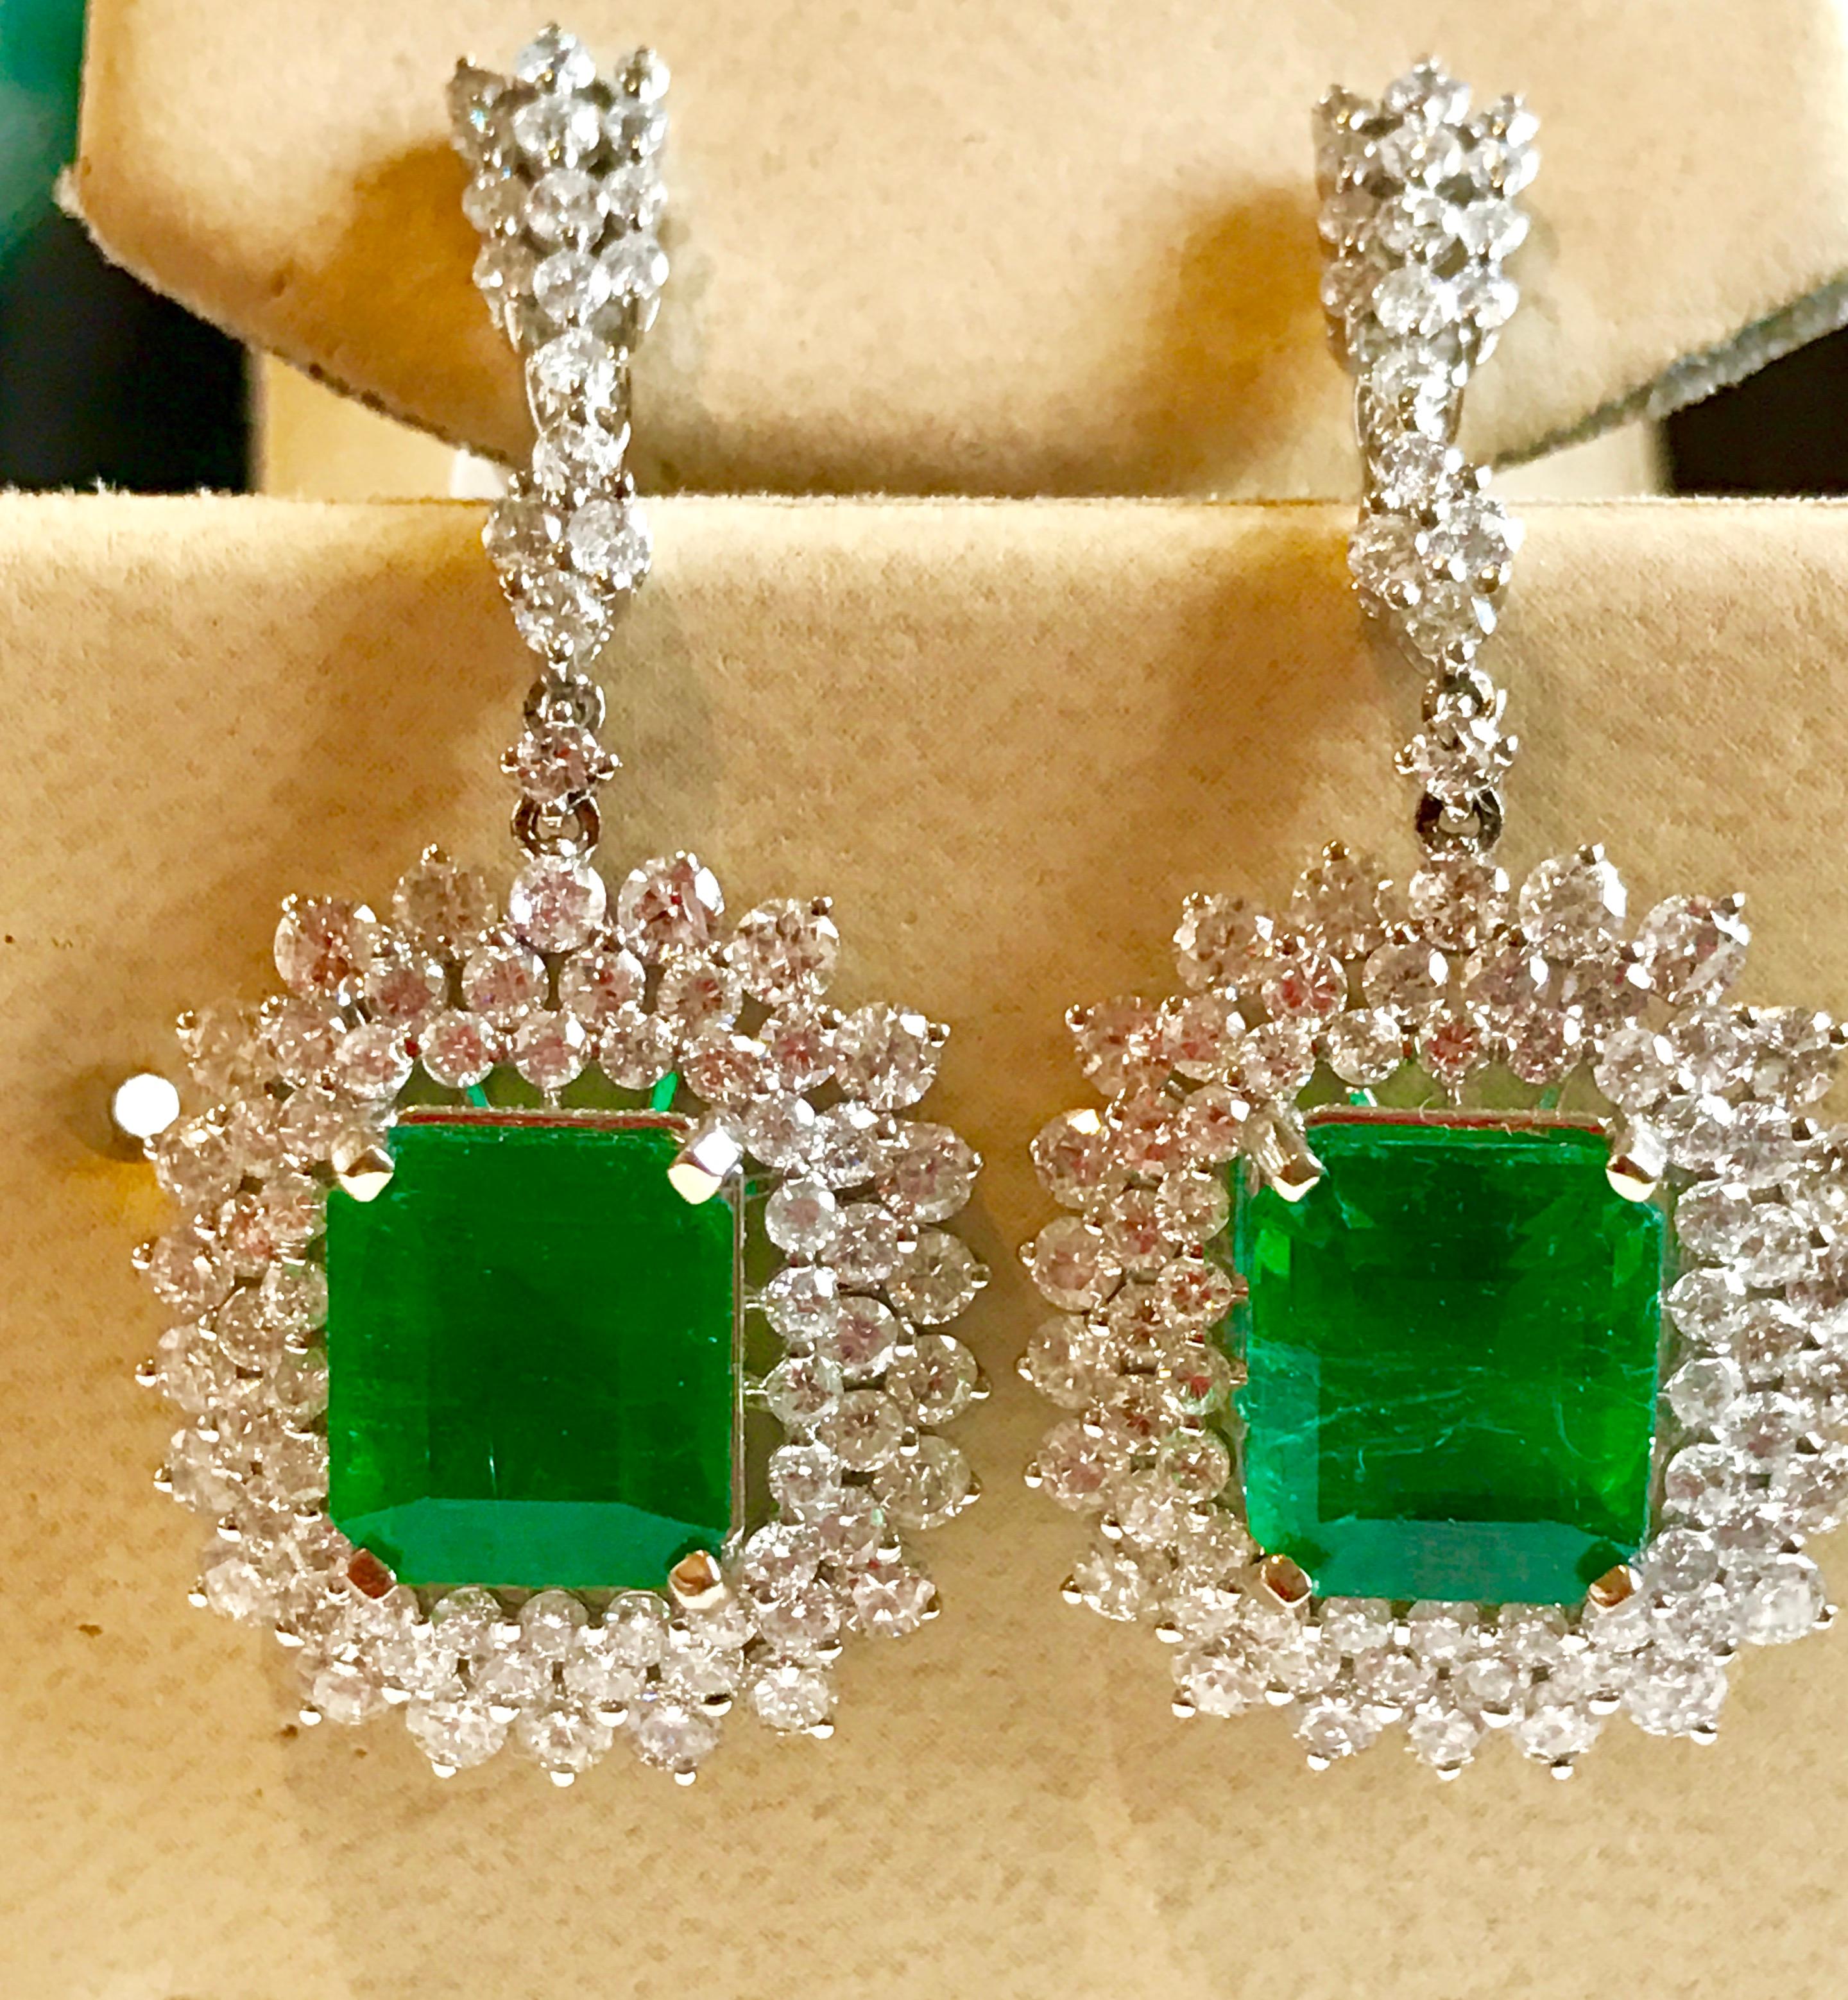 9 Carat Colombian Emerald Cut Emerald Diamond Hanging/Drop Earrings 18Karat Gold 1